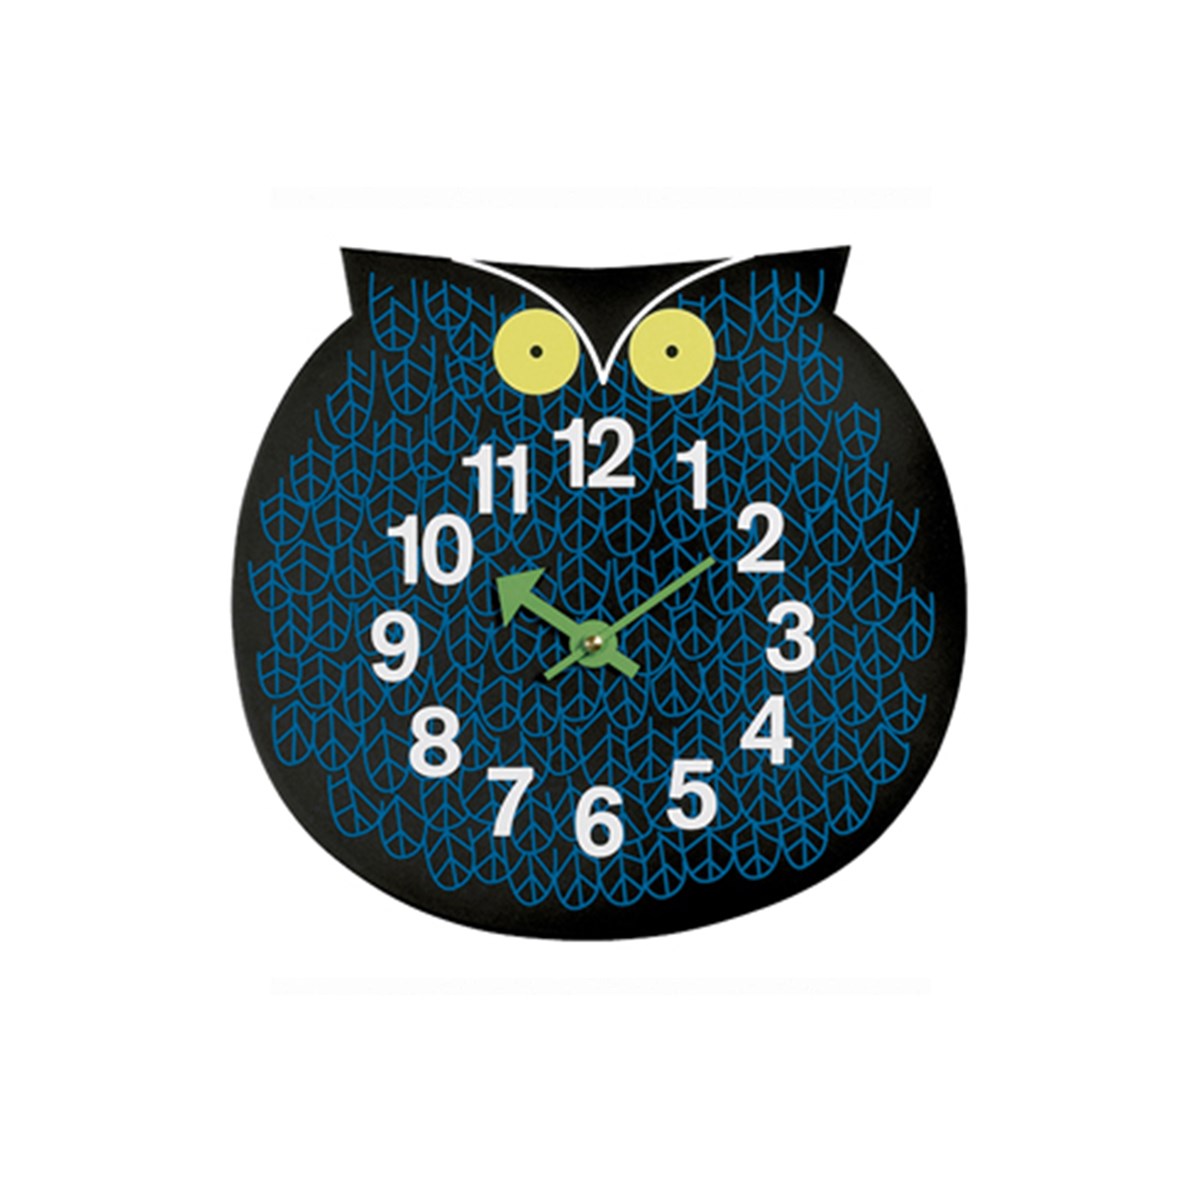 Vitra-Omar-The-Owl-Wall-Clock-Matisse-1